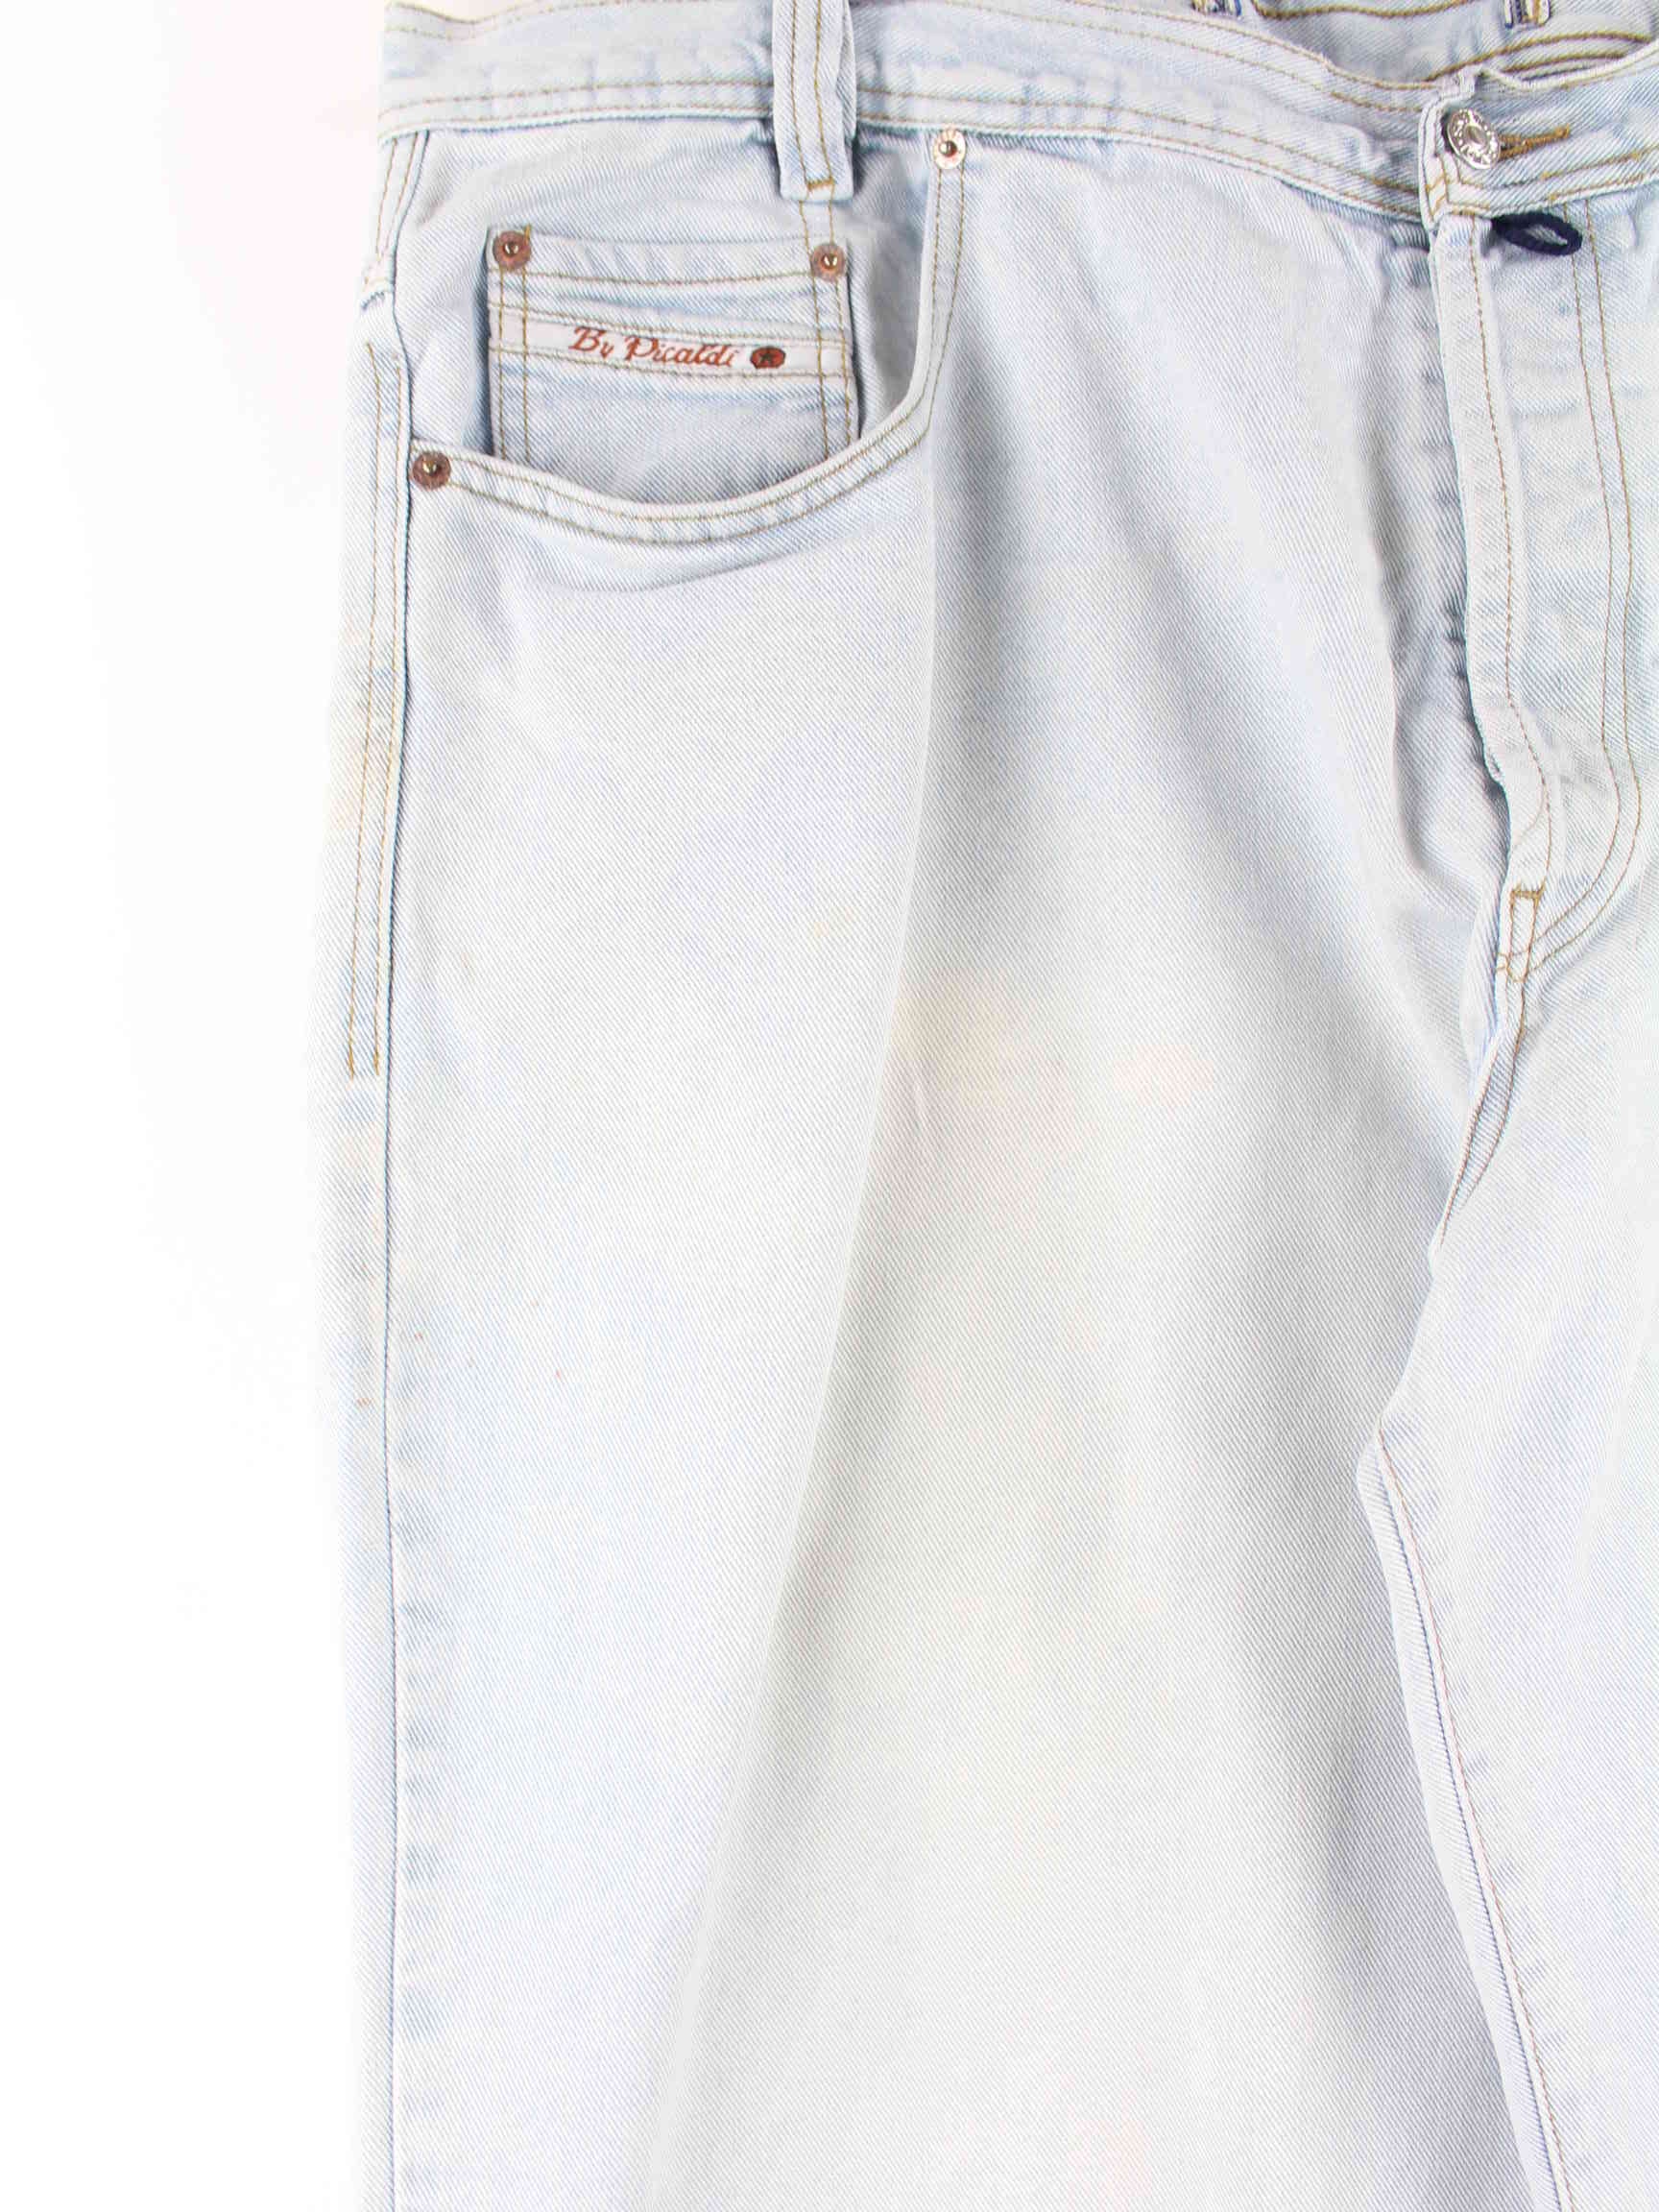 Picaldi 00s Jeans Blau W42 L30 (detail image 1)